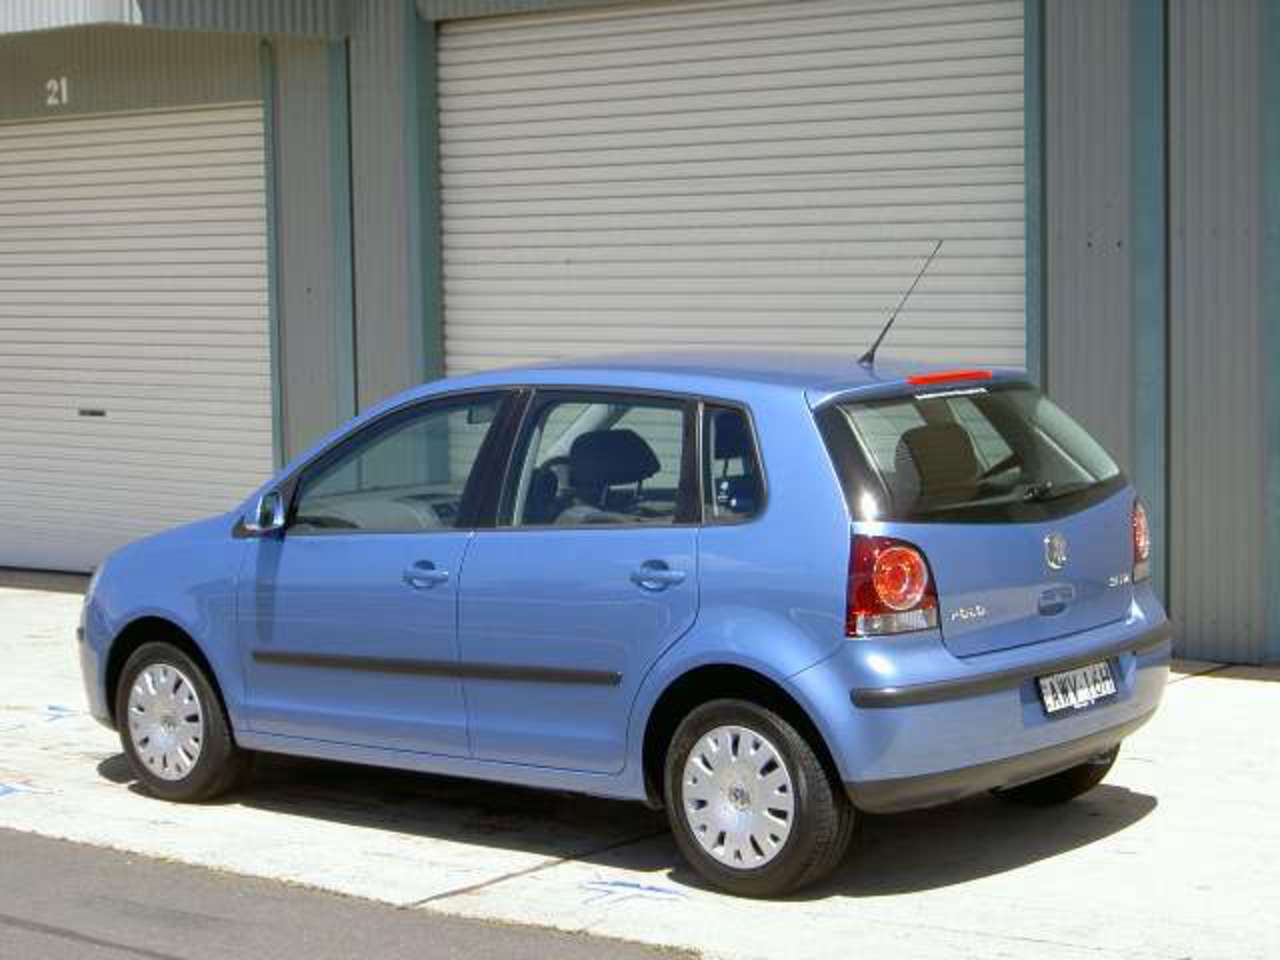 2007 Volkswagen Polo picture, exterior